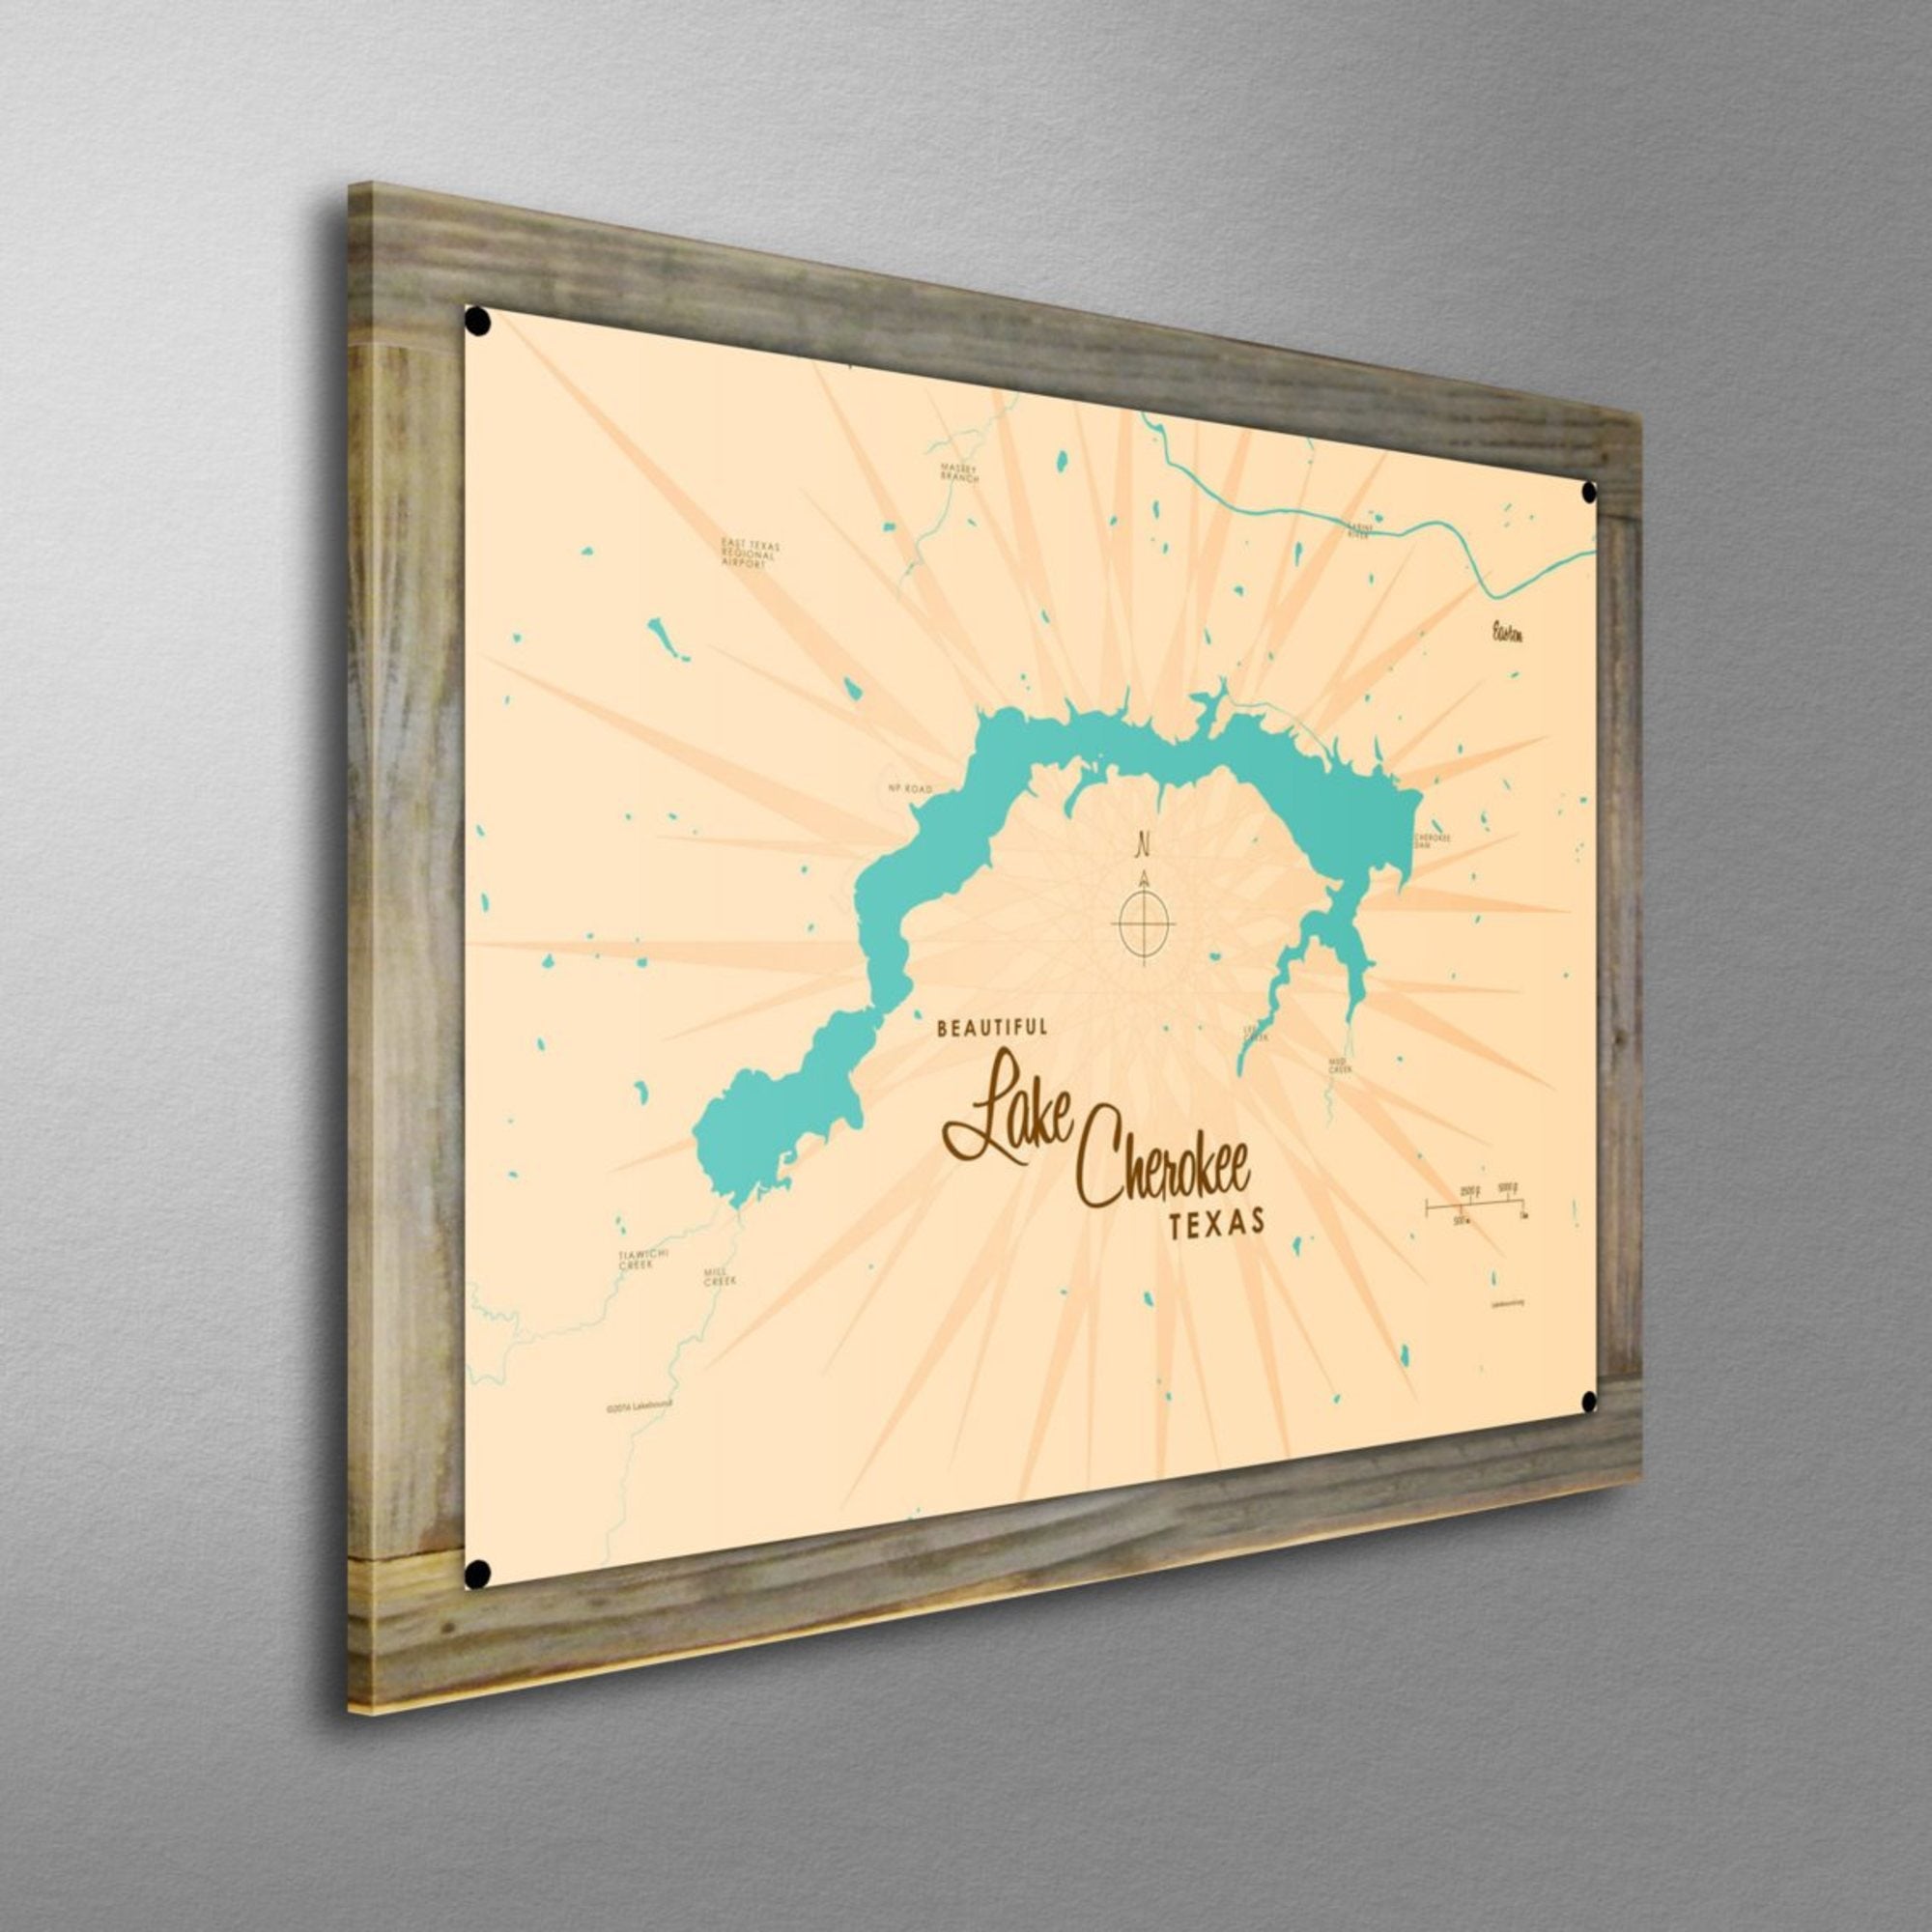 Lake Cherokee Texas, Wood-Mounted Metal Sign Map Art